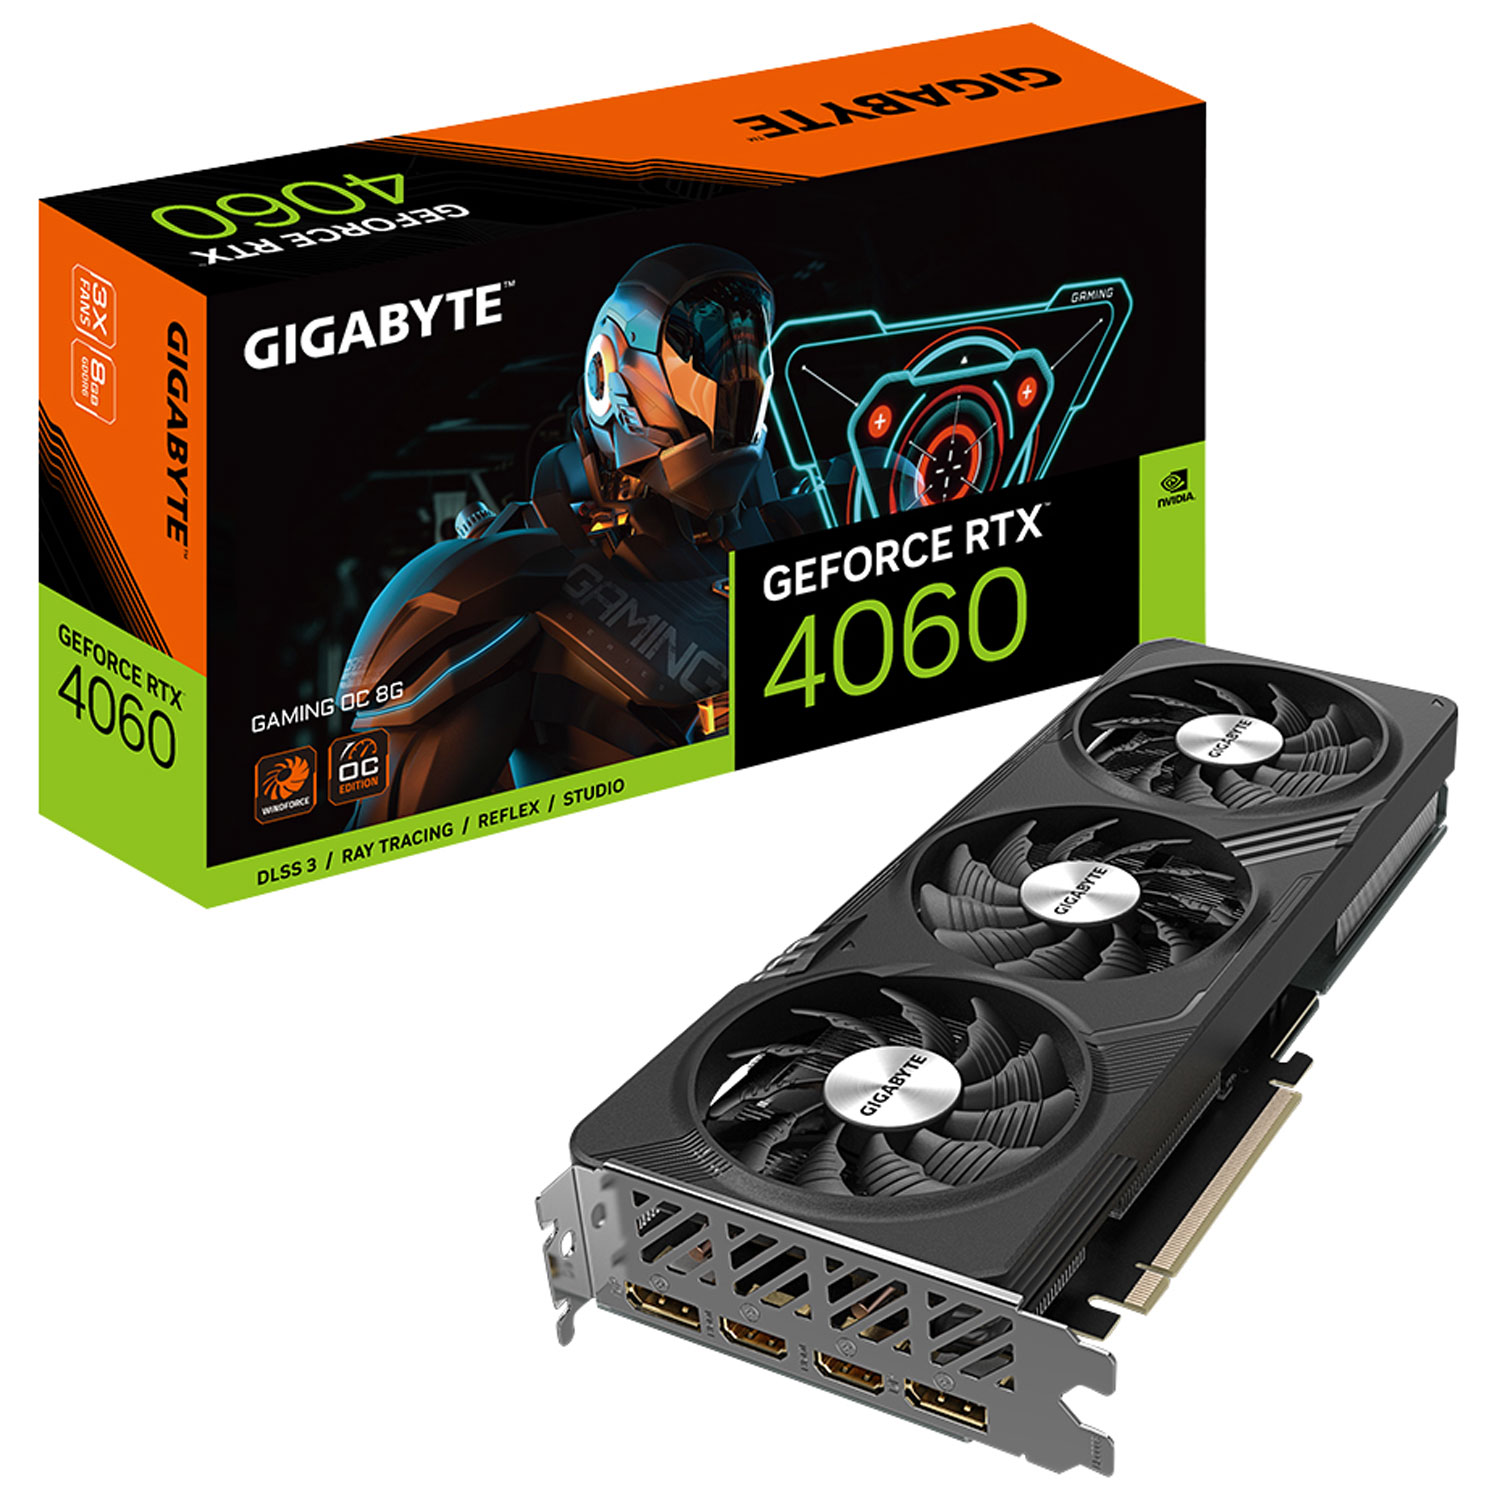 GIGABYTE GeForce RTX 4060 Gaming OC 8G GDDR6 Video Card